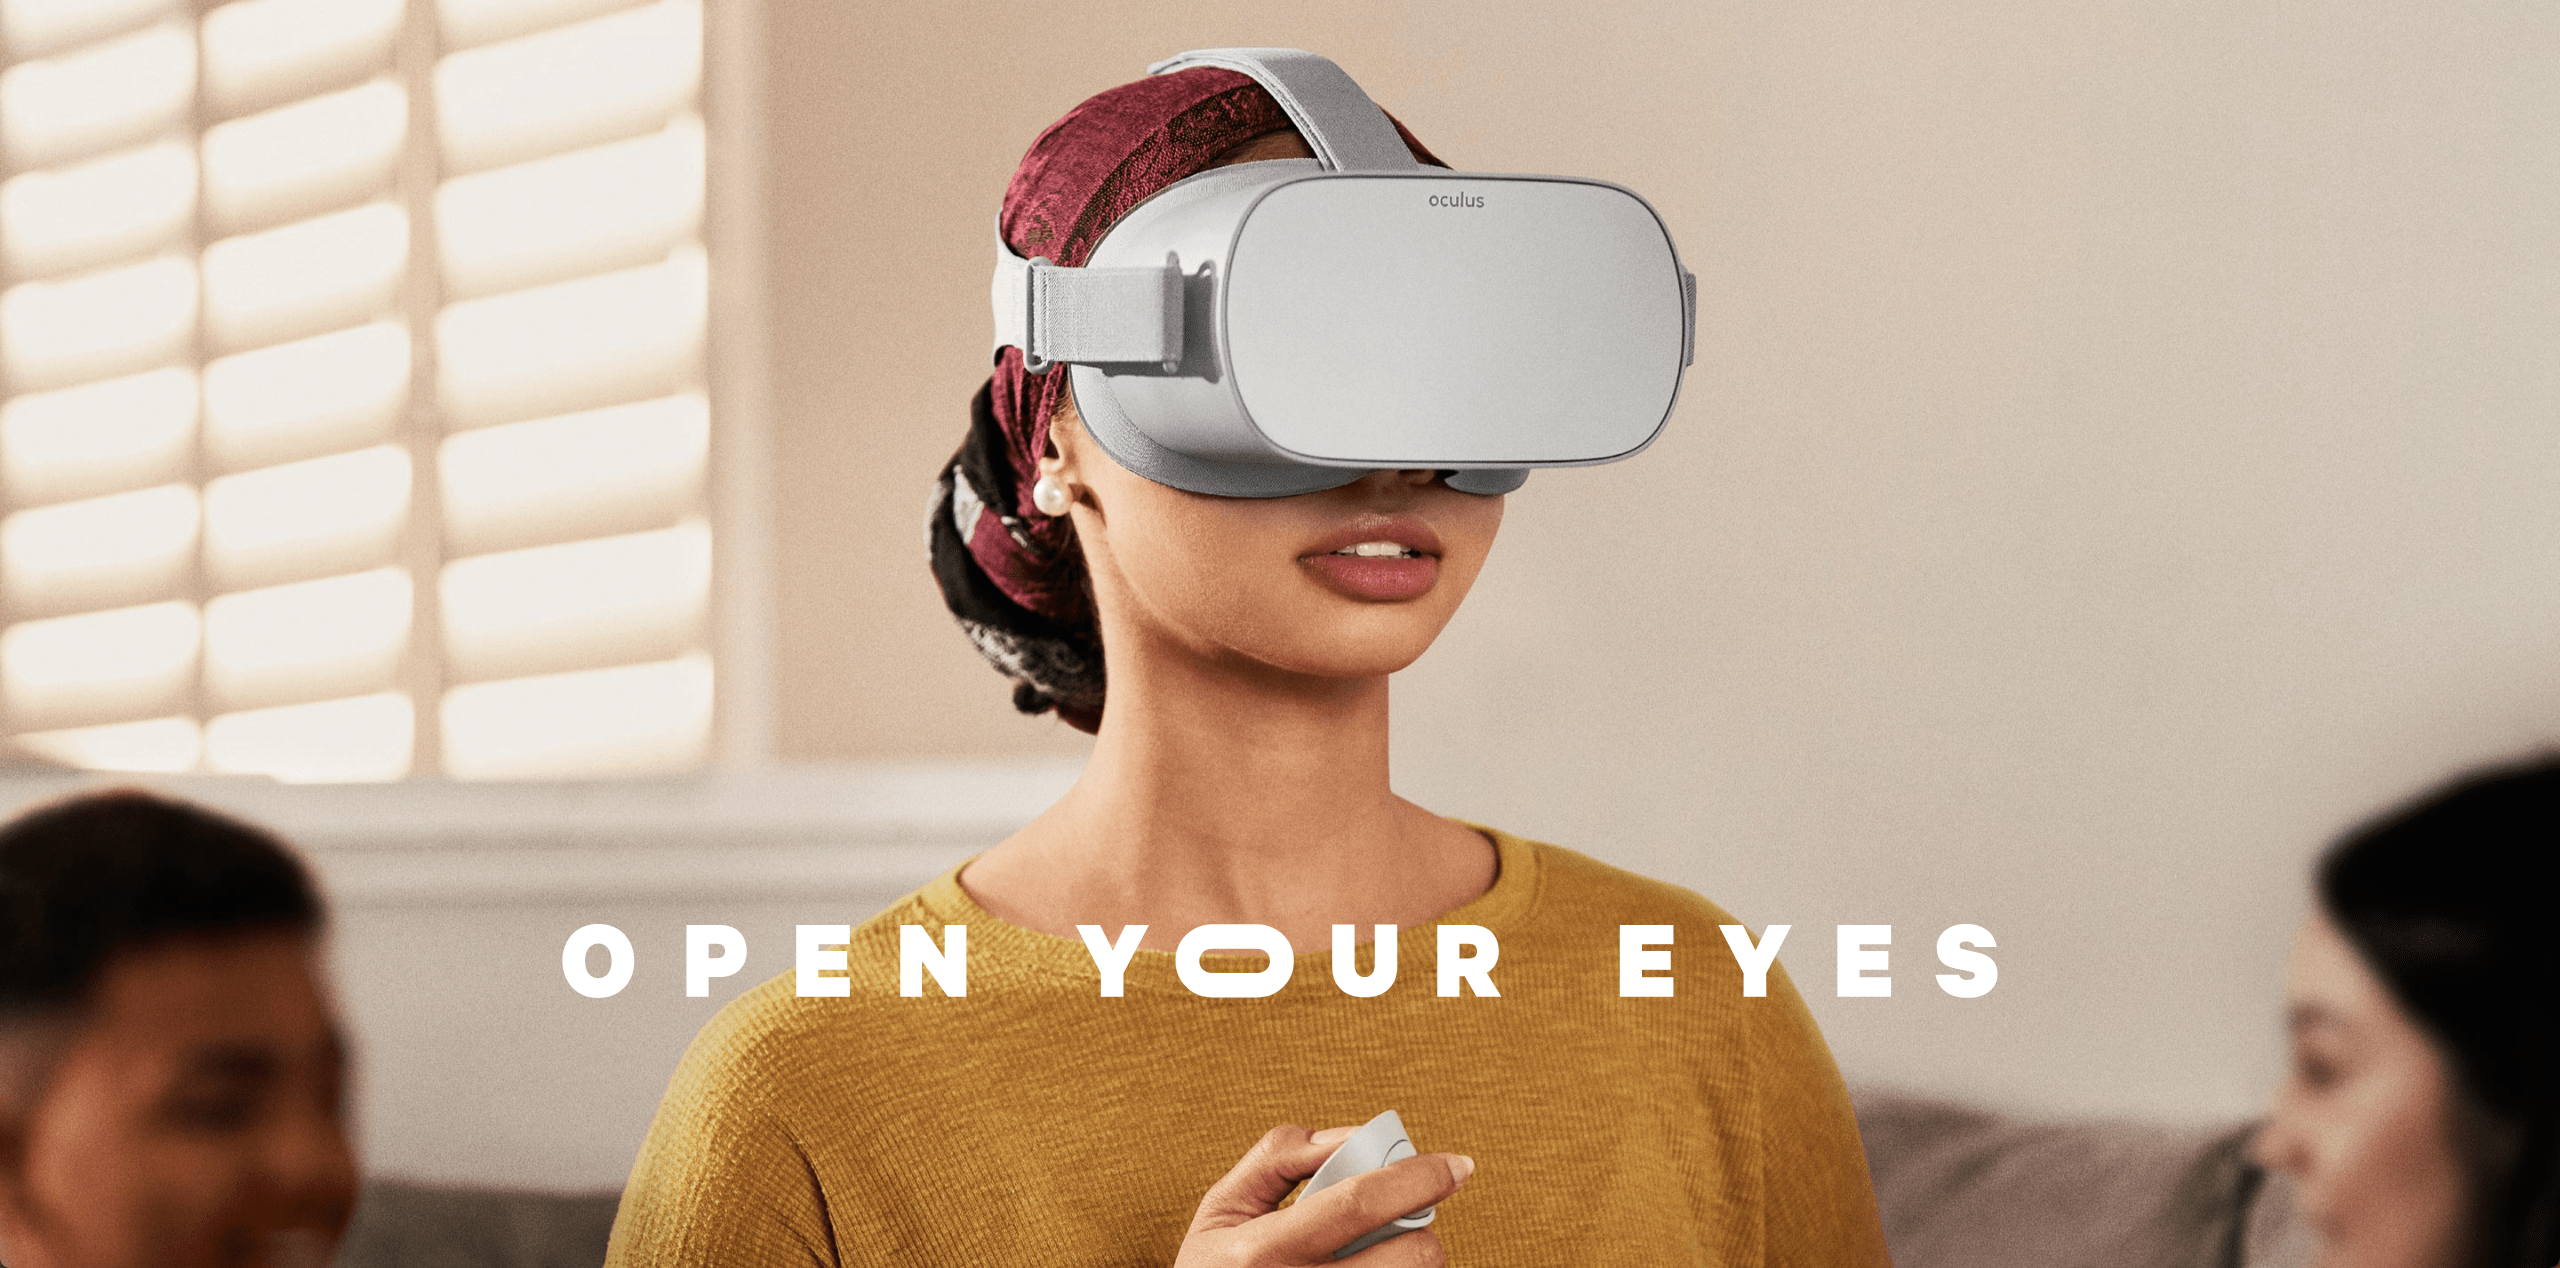 Oculus Go Relaxation App